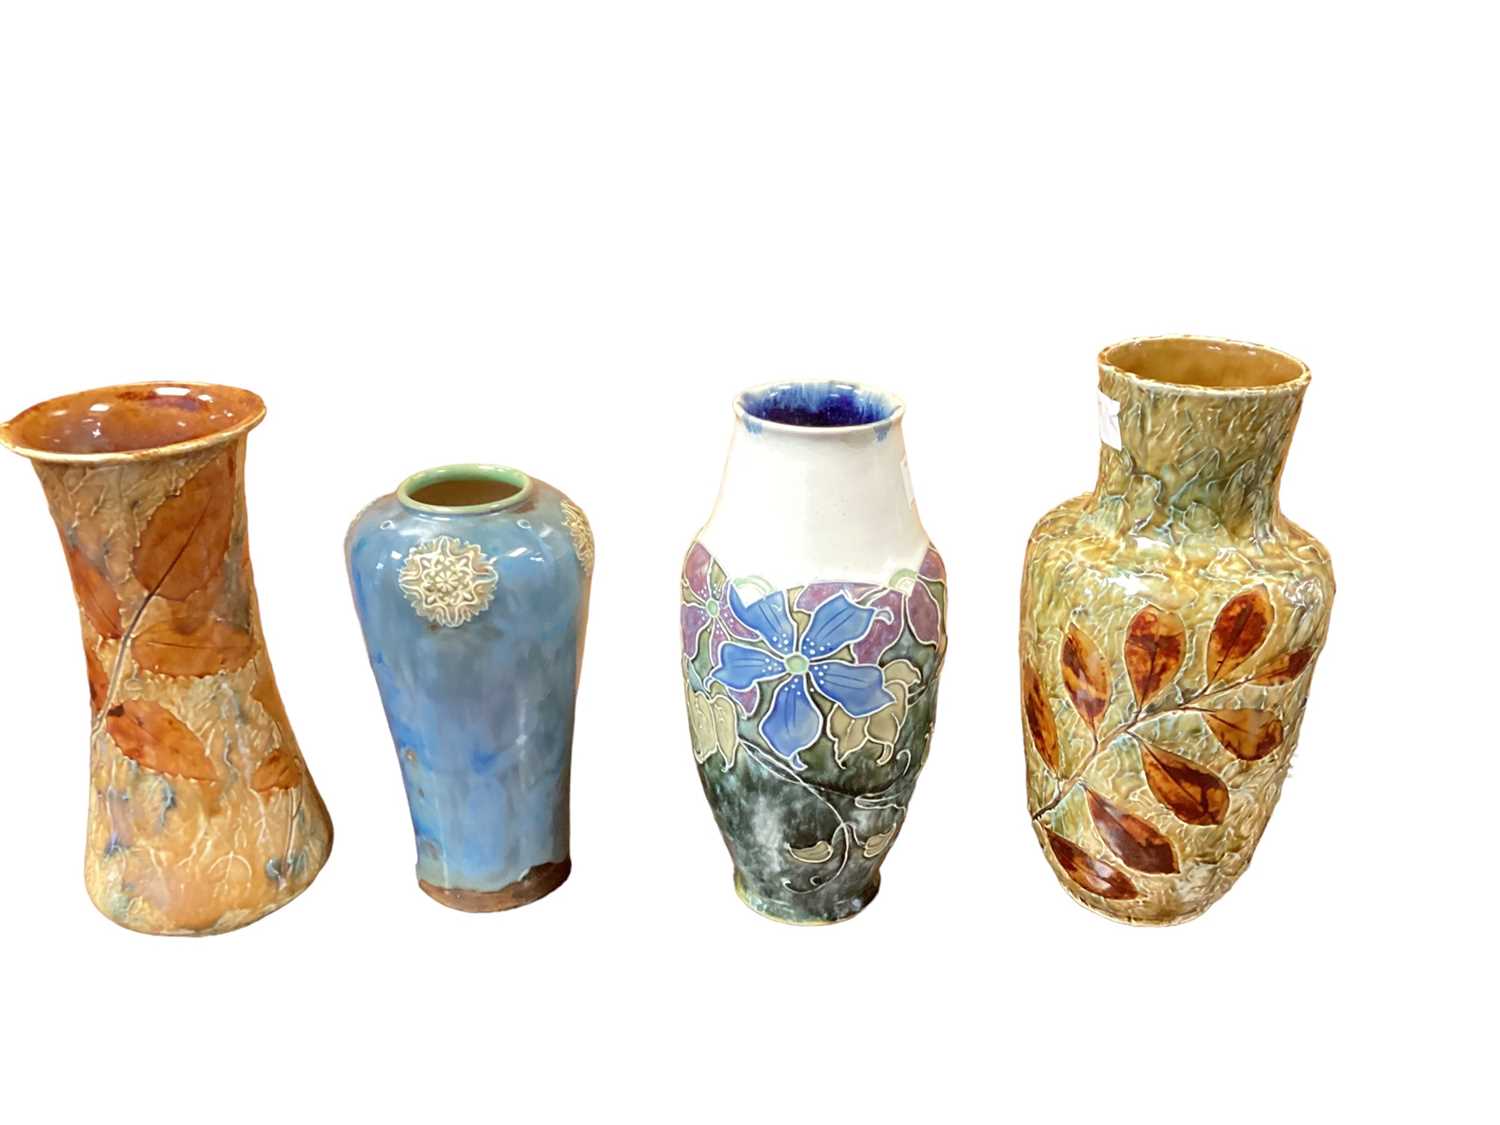 Four Royal Doulton stoneware vases, tallest is 26cm high